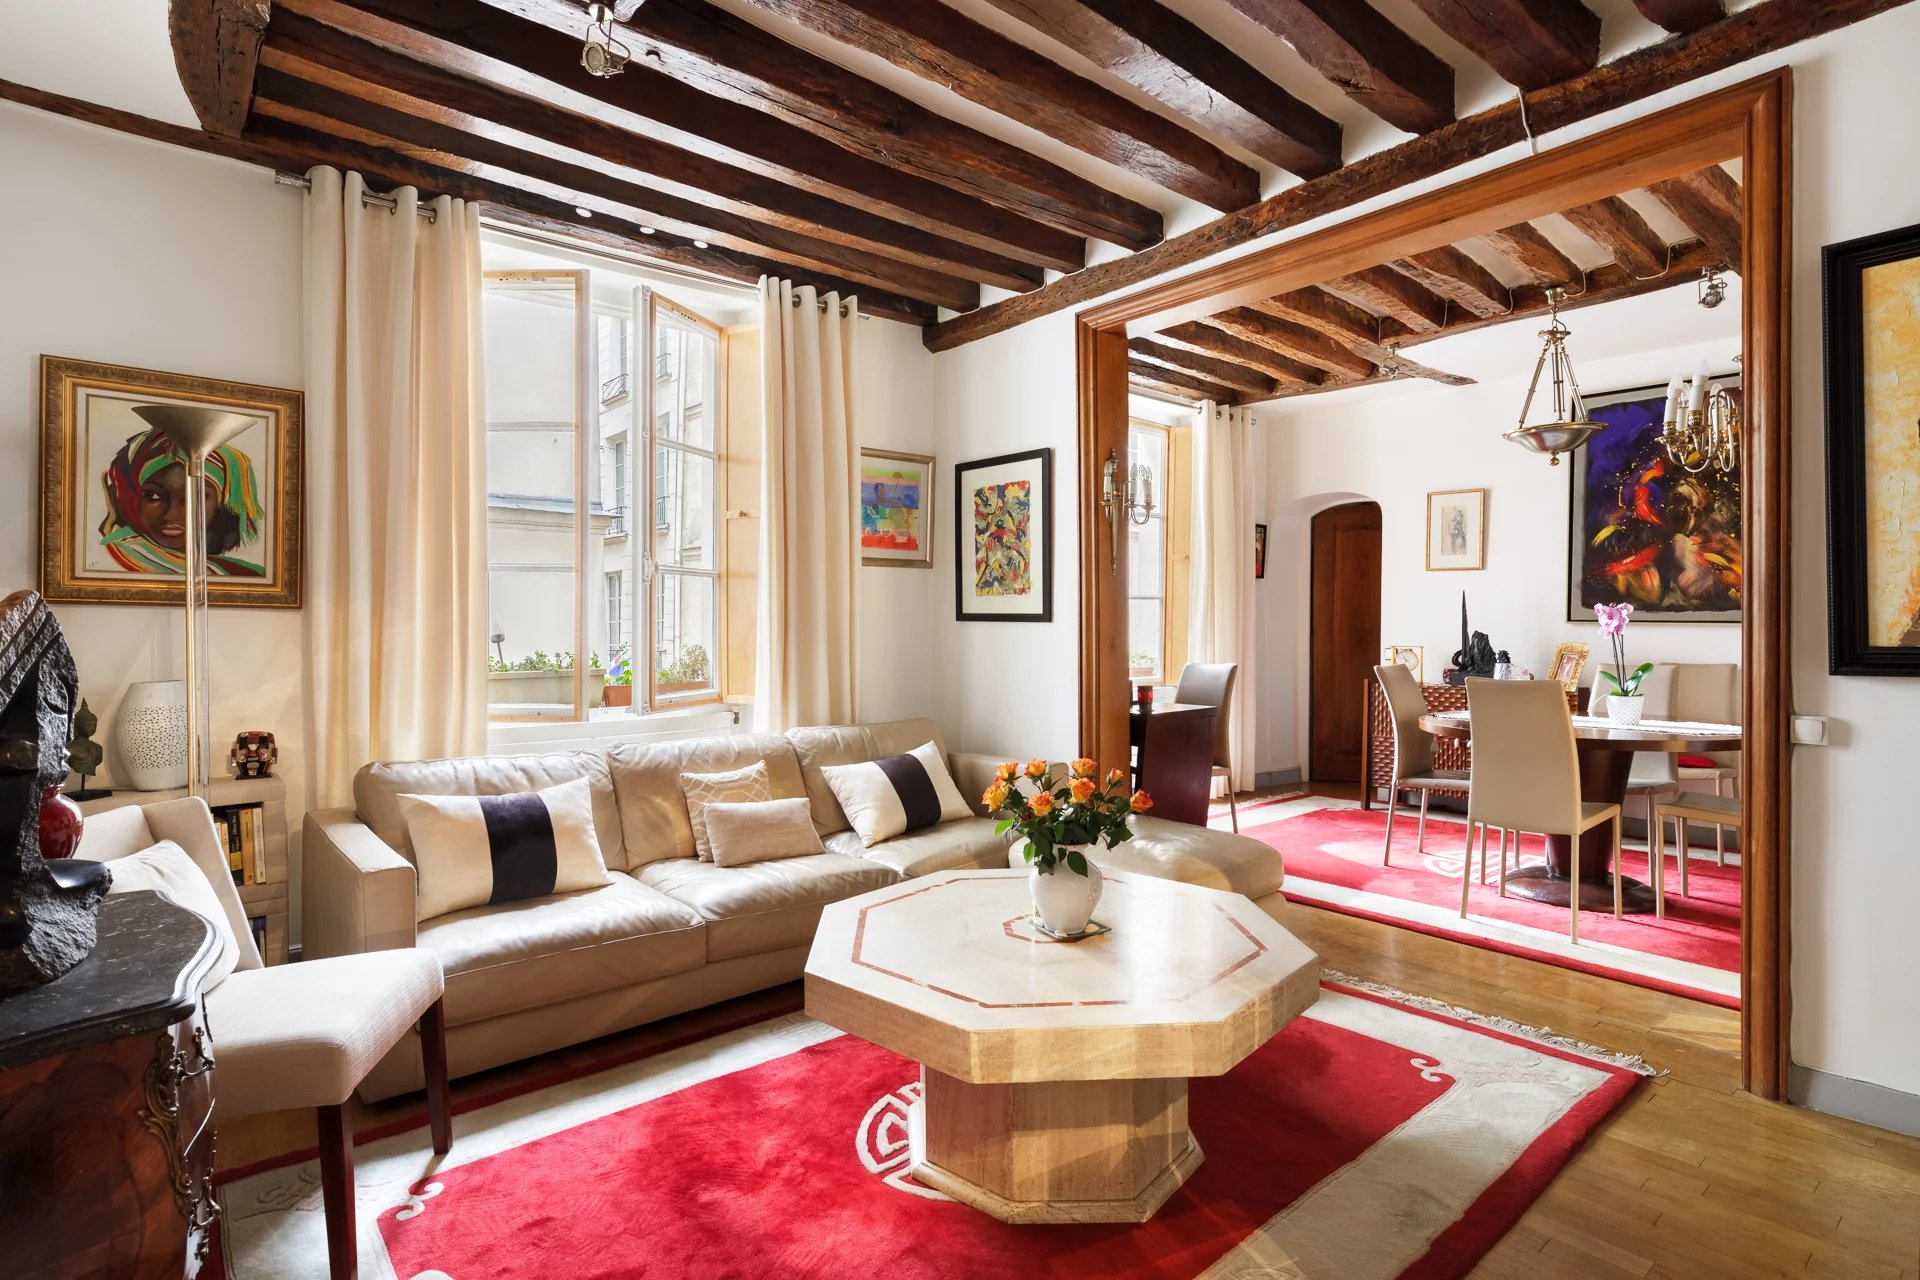 Apartment for sale - Place Saint Sulpice - 75006 - 2 bedrooms